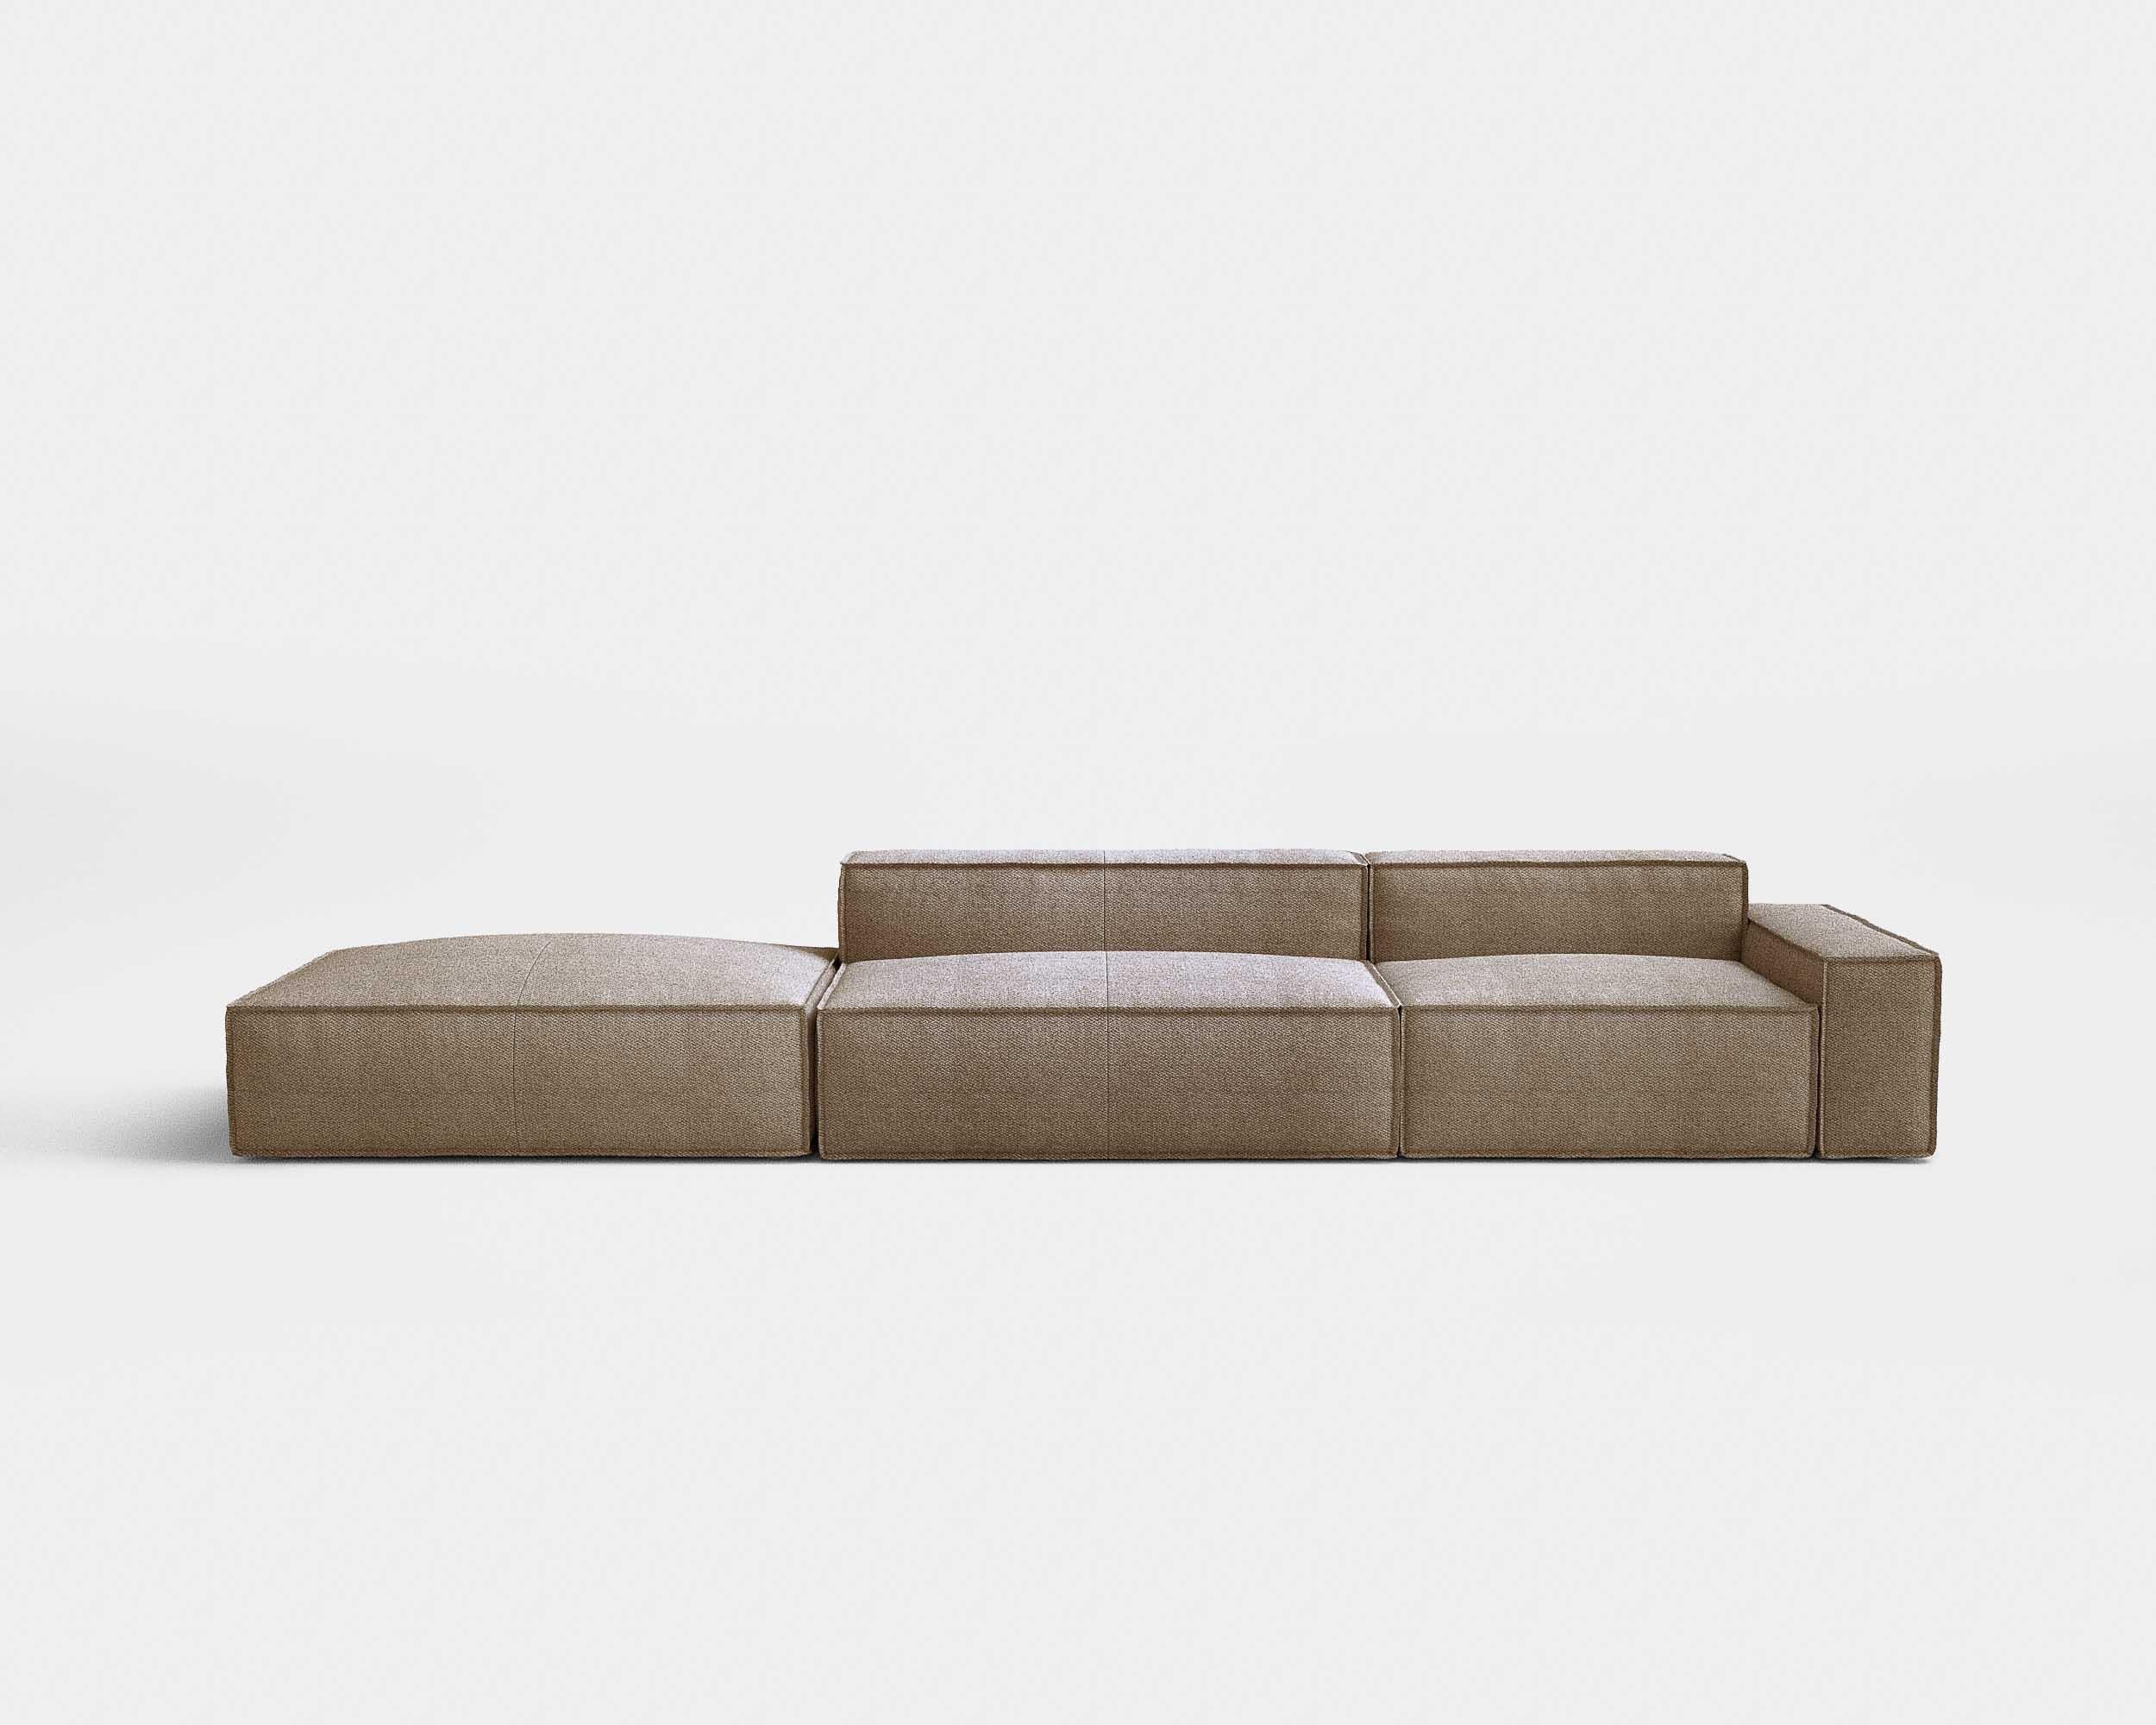 Organic Modern Contemporary Sofa 'Davis' by Amura Lab, Brera 850 - Brown 04 For Sale